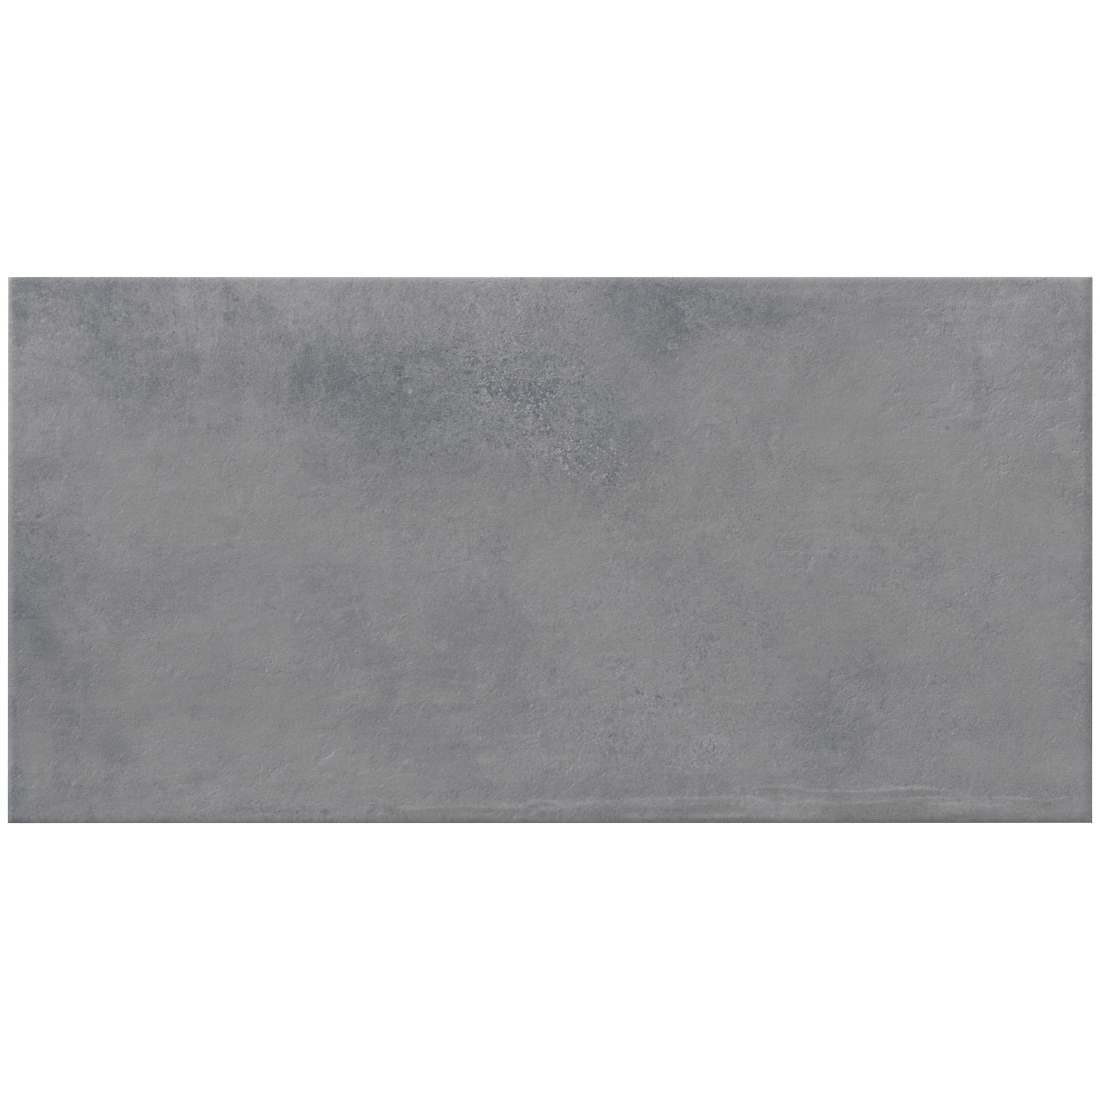 Materika Dark Grey RC 30.5x60.5cm